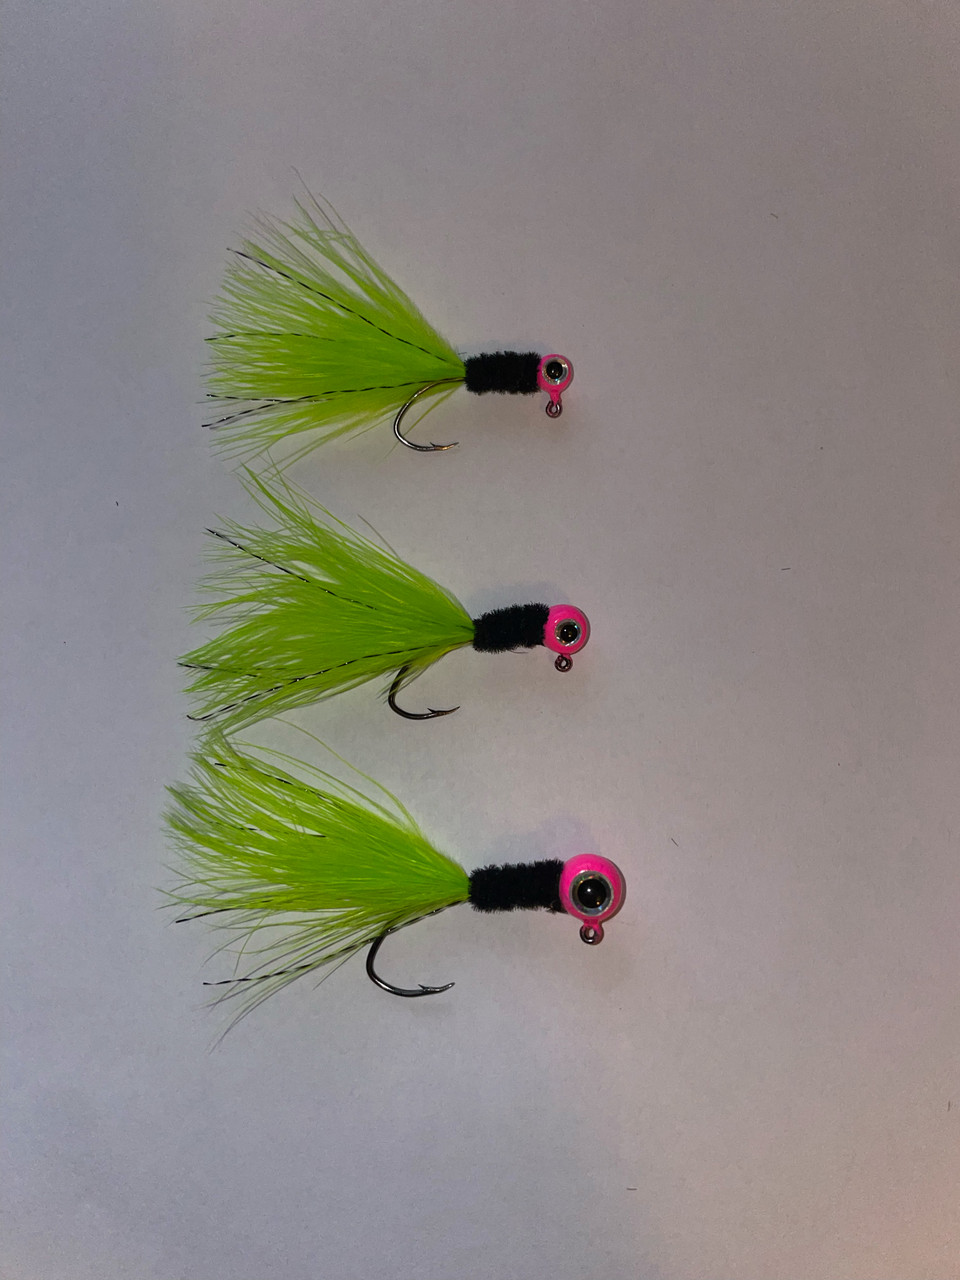 Moose Baits Curly Tail Grub Fishing Jigs - Soft Fishing Lures for Crappie -  Fishing Gear for Crappie - 7 Count Tackle Kit for Crappie Fishing (Pink